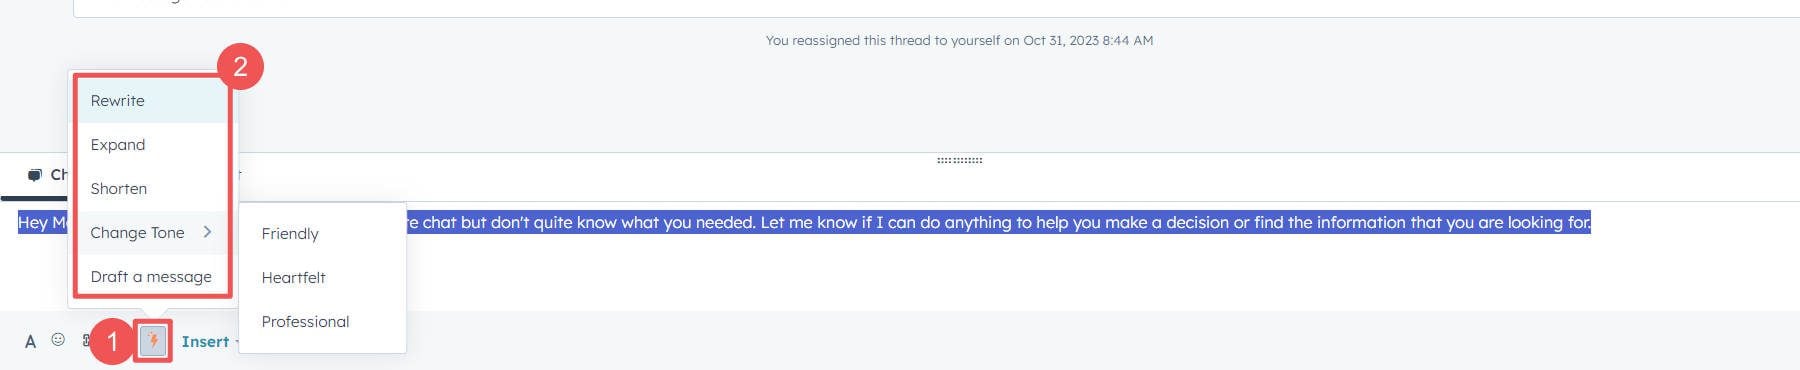 Hubspot Conversation Inbox - AI Response Assistant